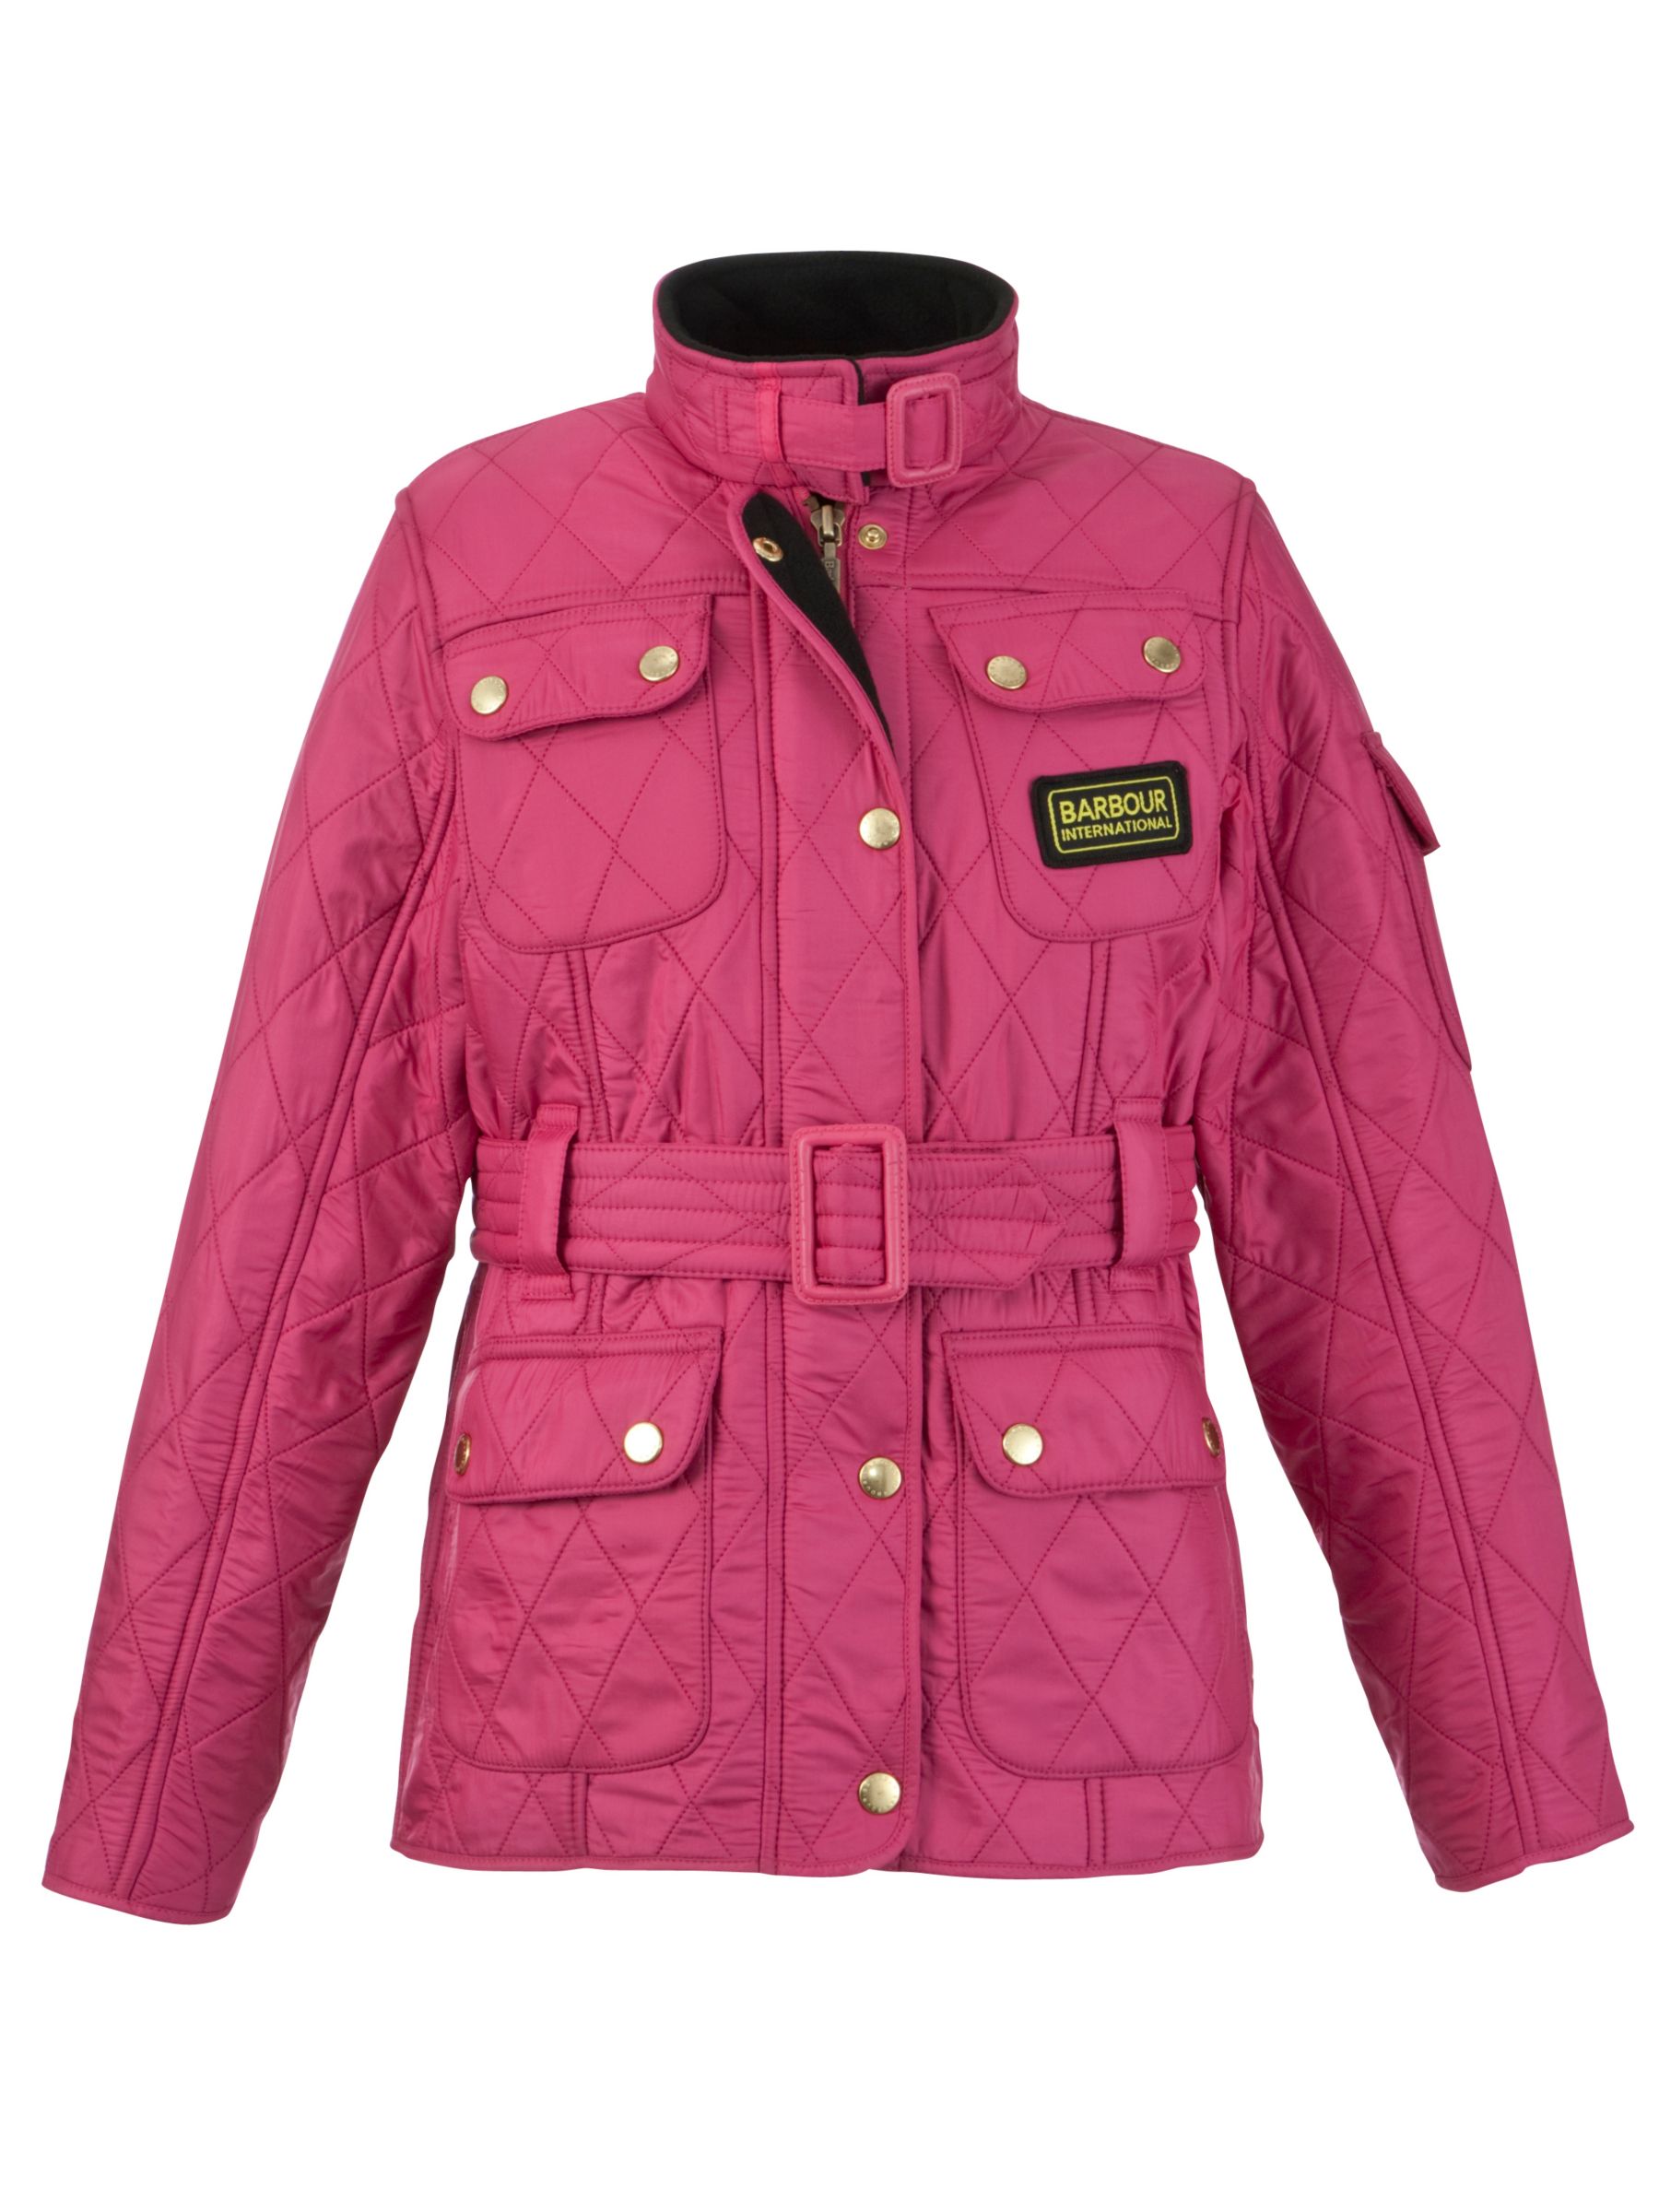 barbour jacket pink